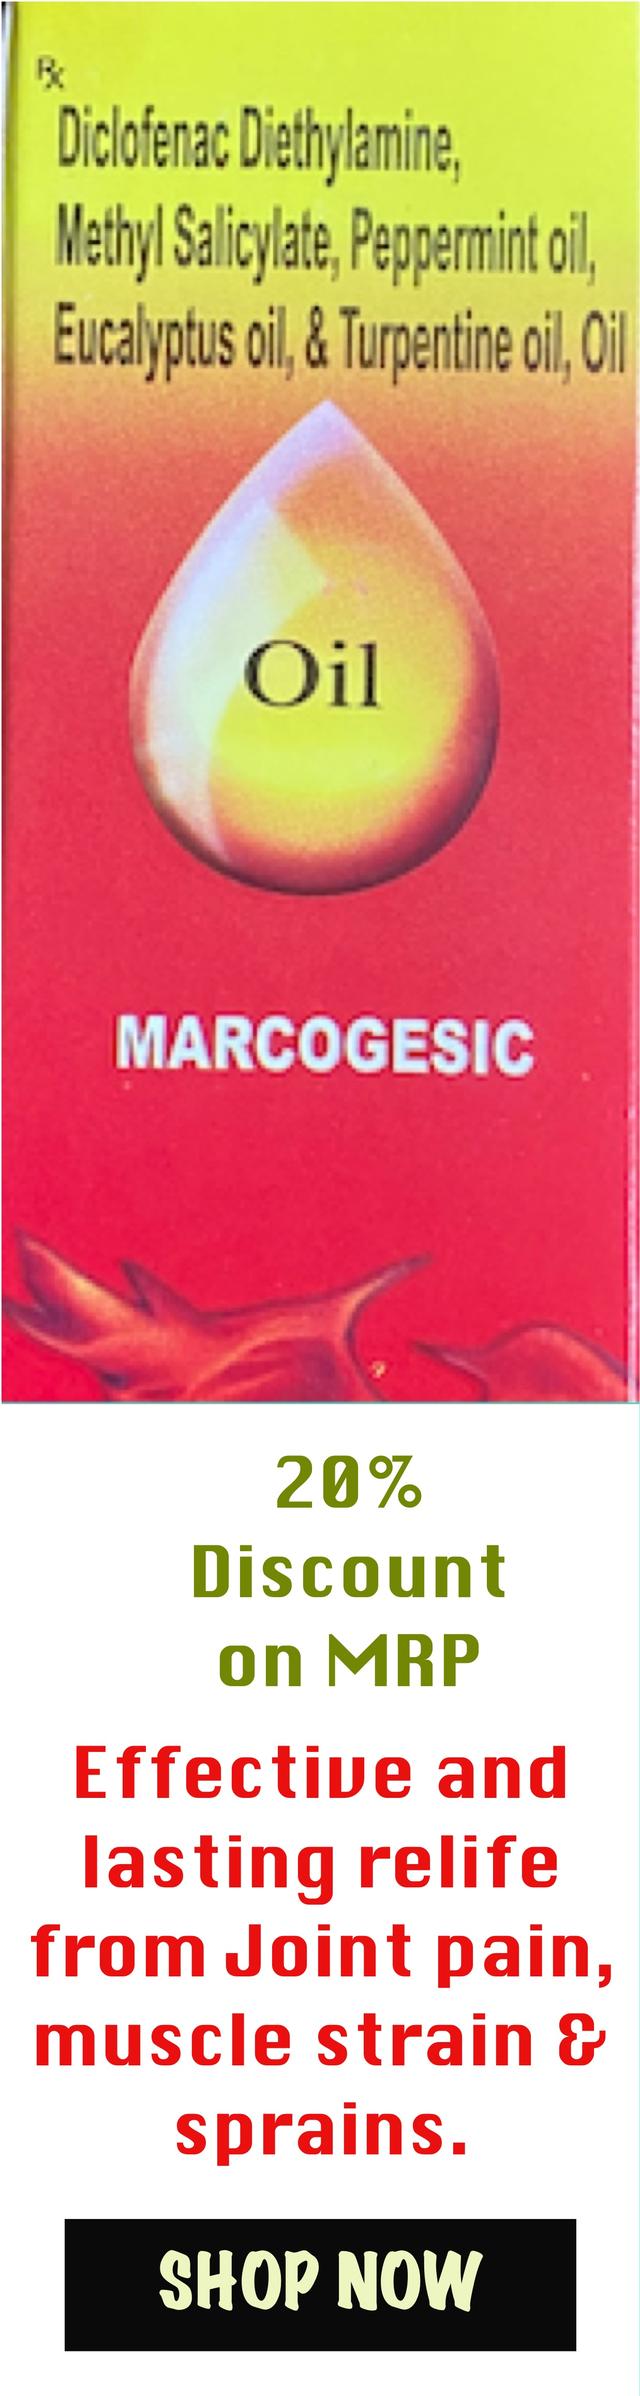 marcogesic oil 1